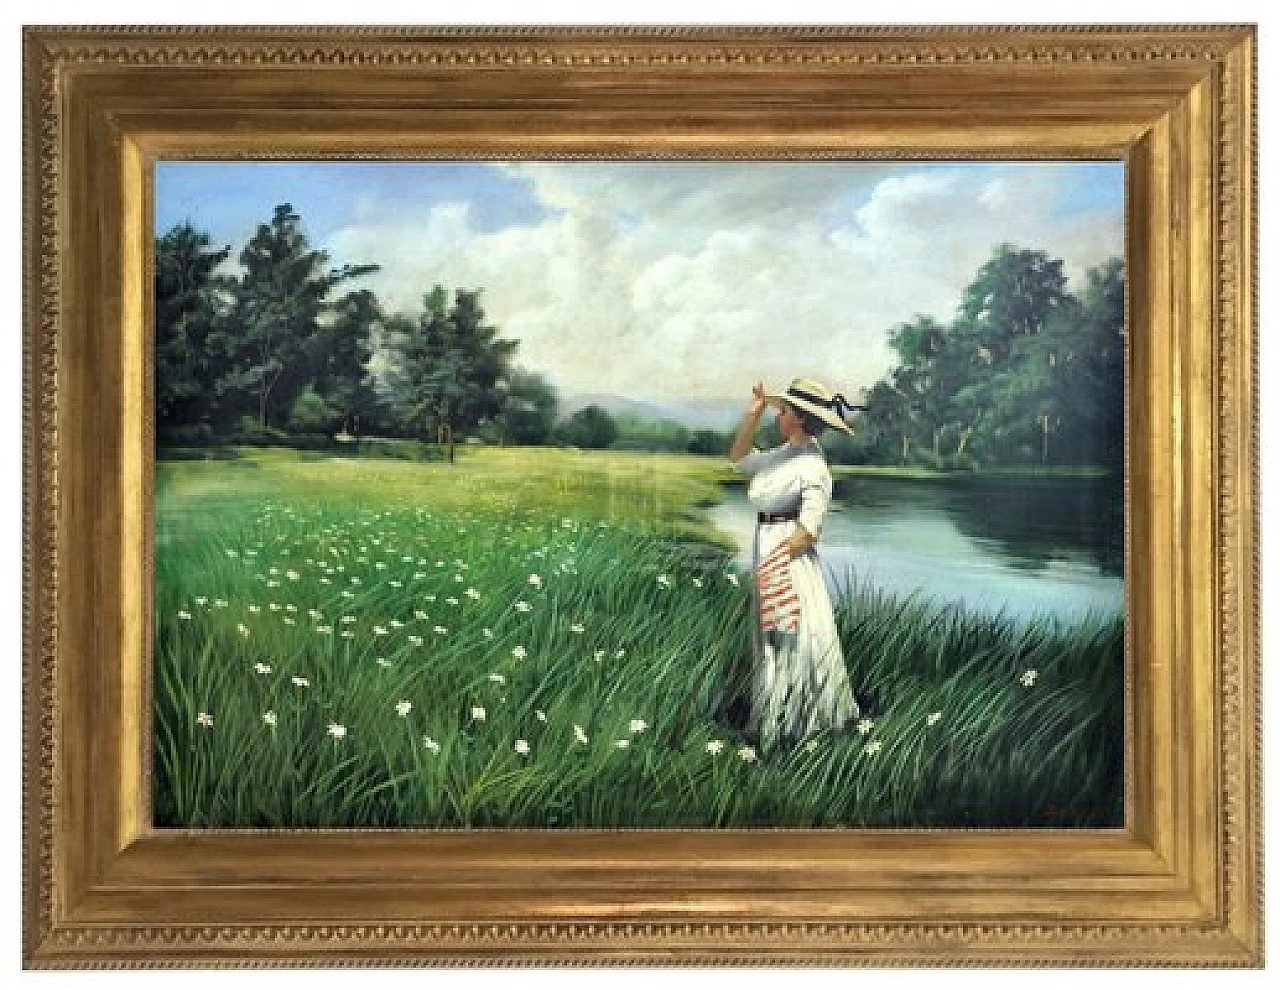 Jean Louis Richard, walk on the lake, oil painting on canvas, 2002 1